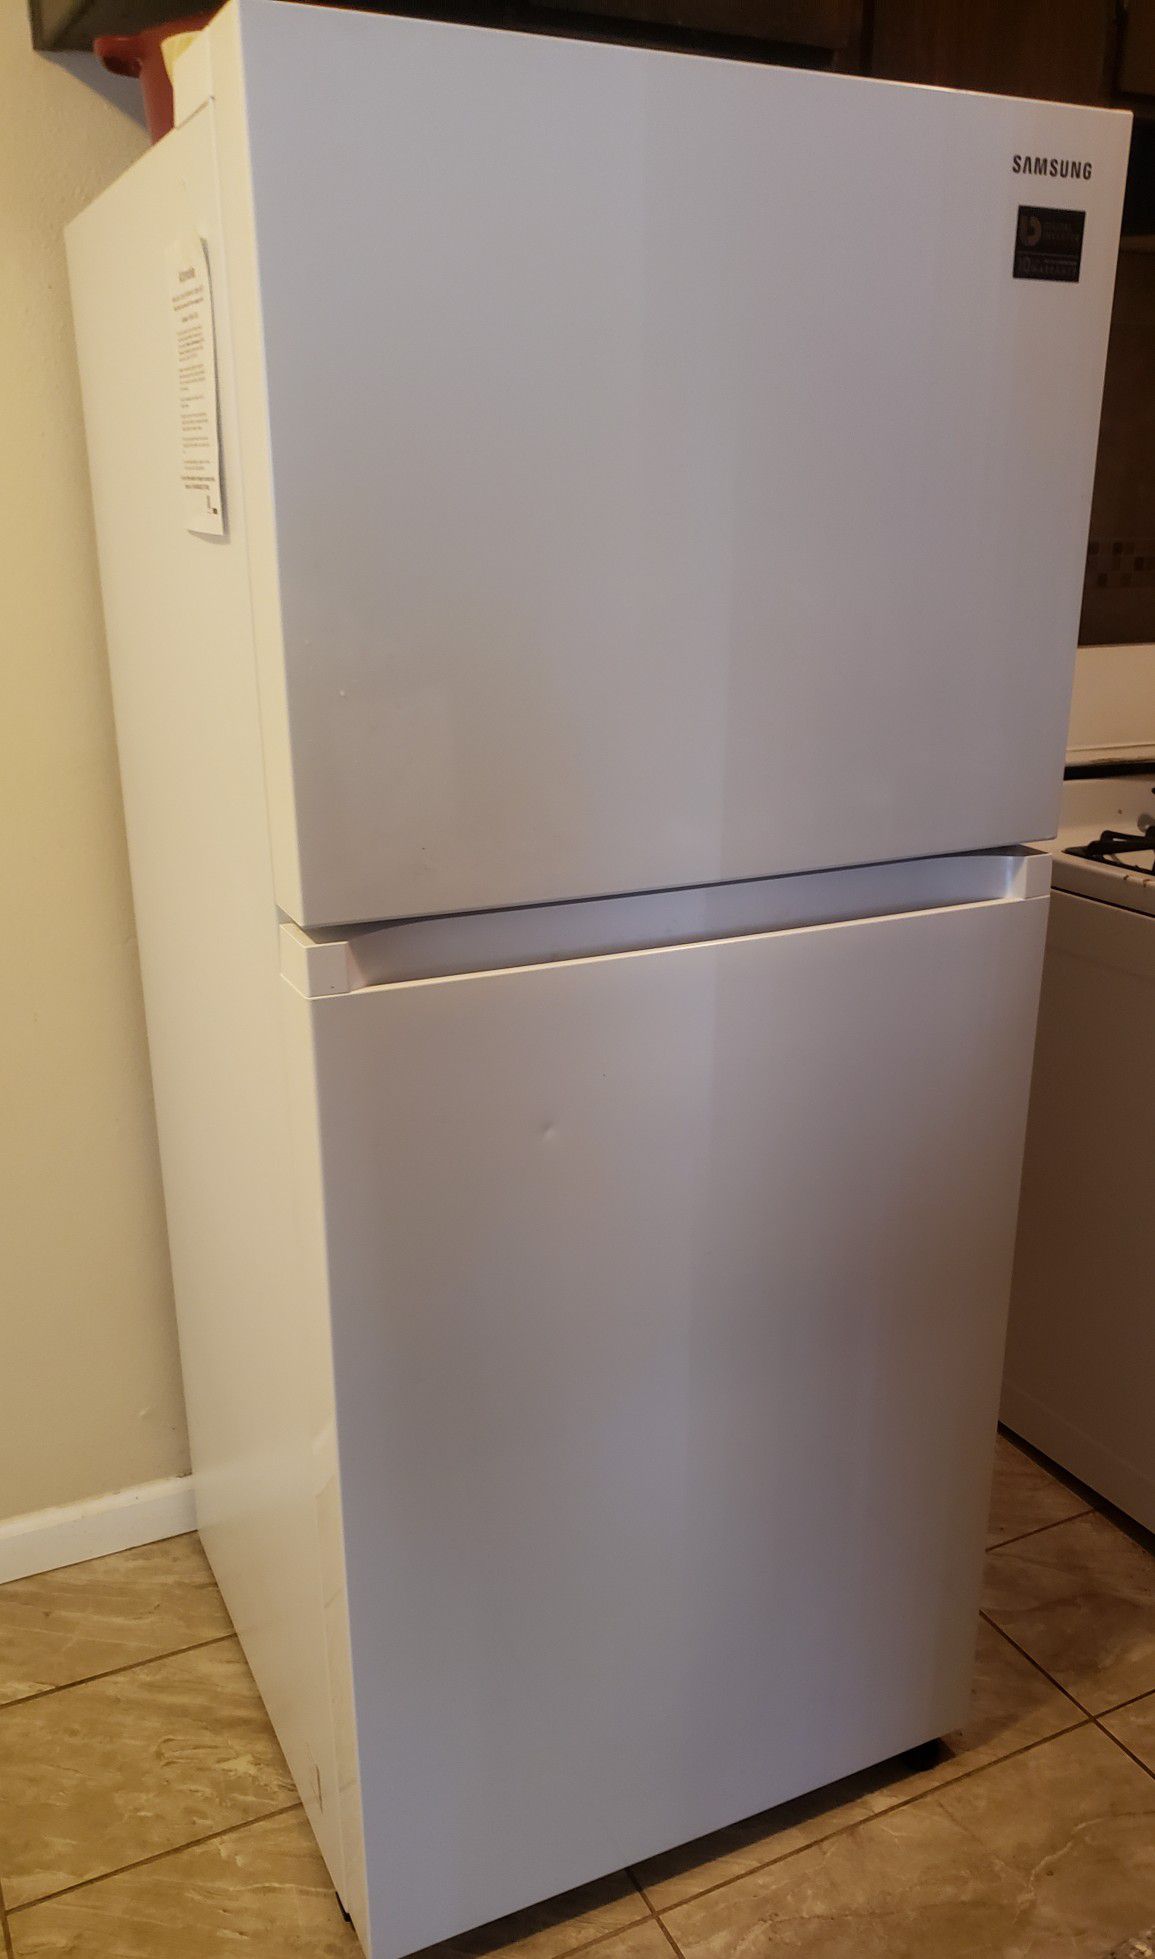 Samsung 17.6 Cu. Ft. Refrigerator in white